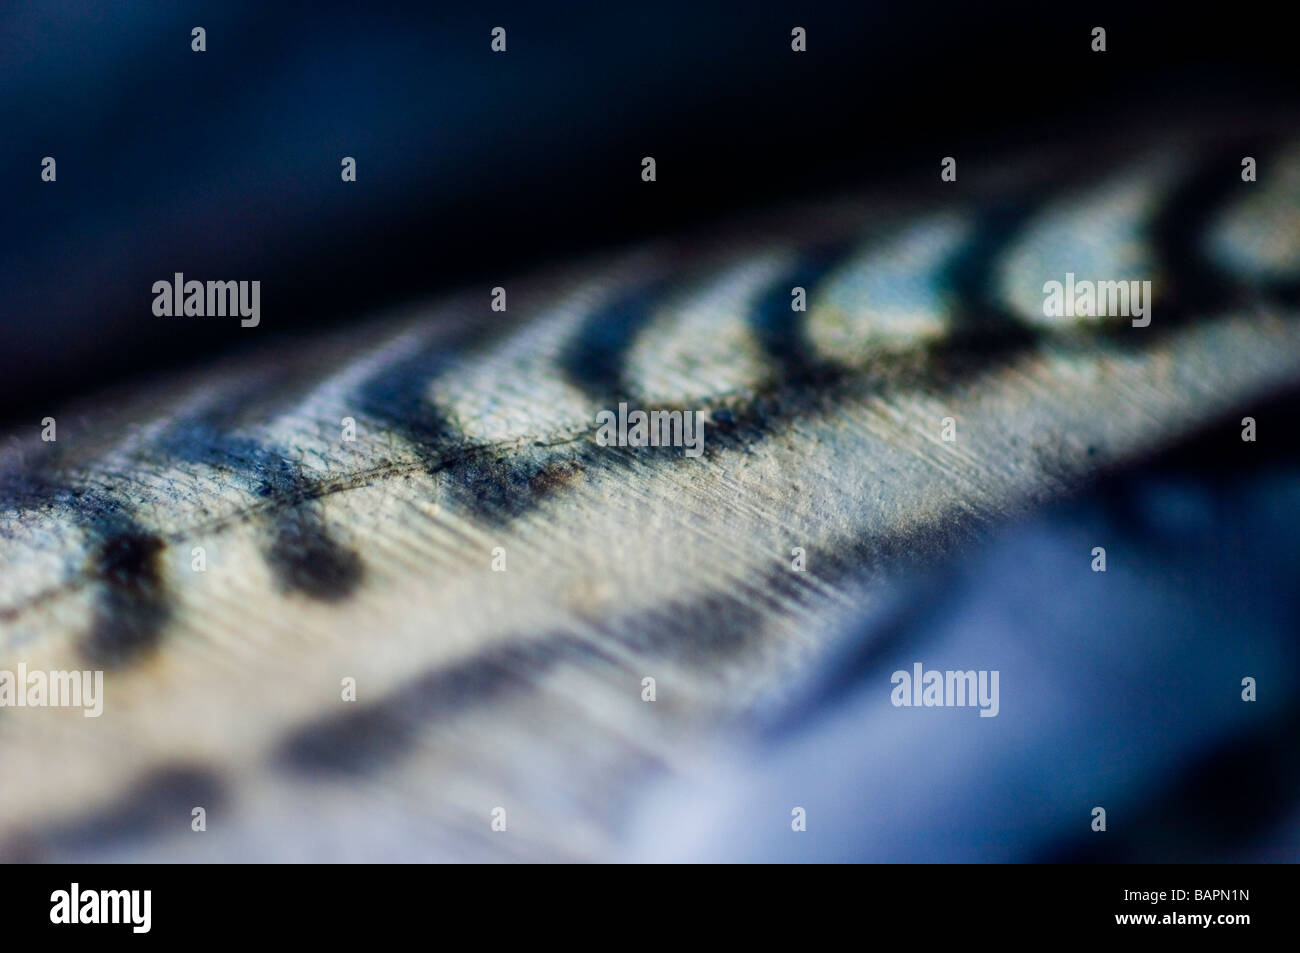 Scomber scombrus. Mackerel scales, close-up, UK Stock Photo